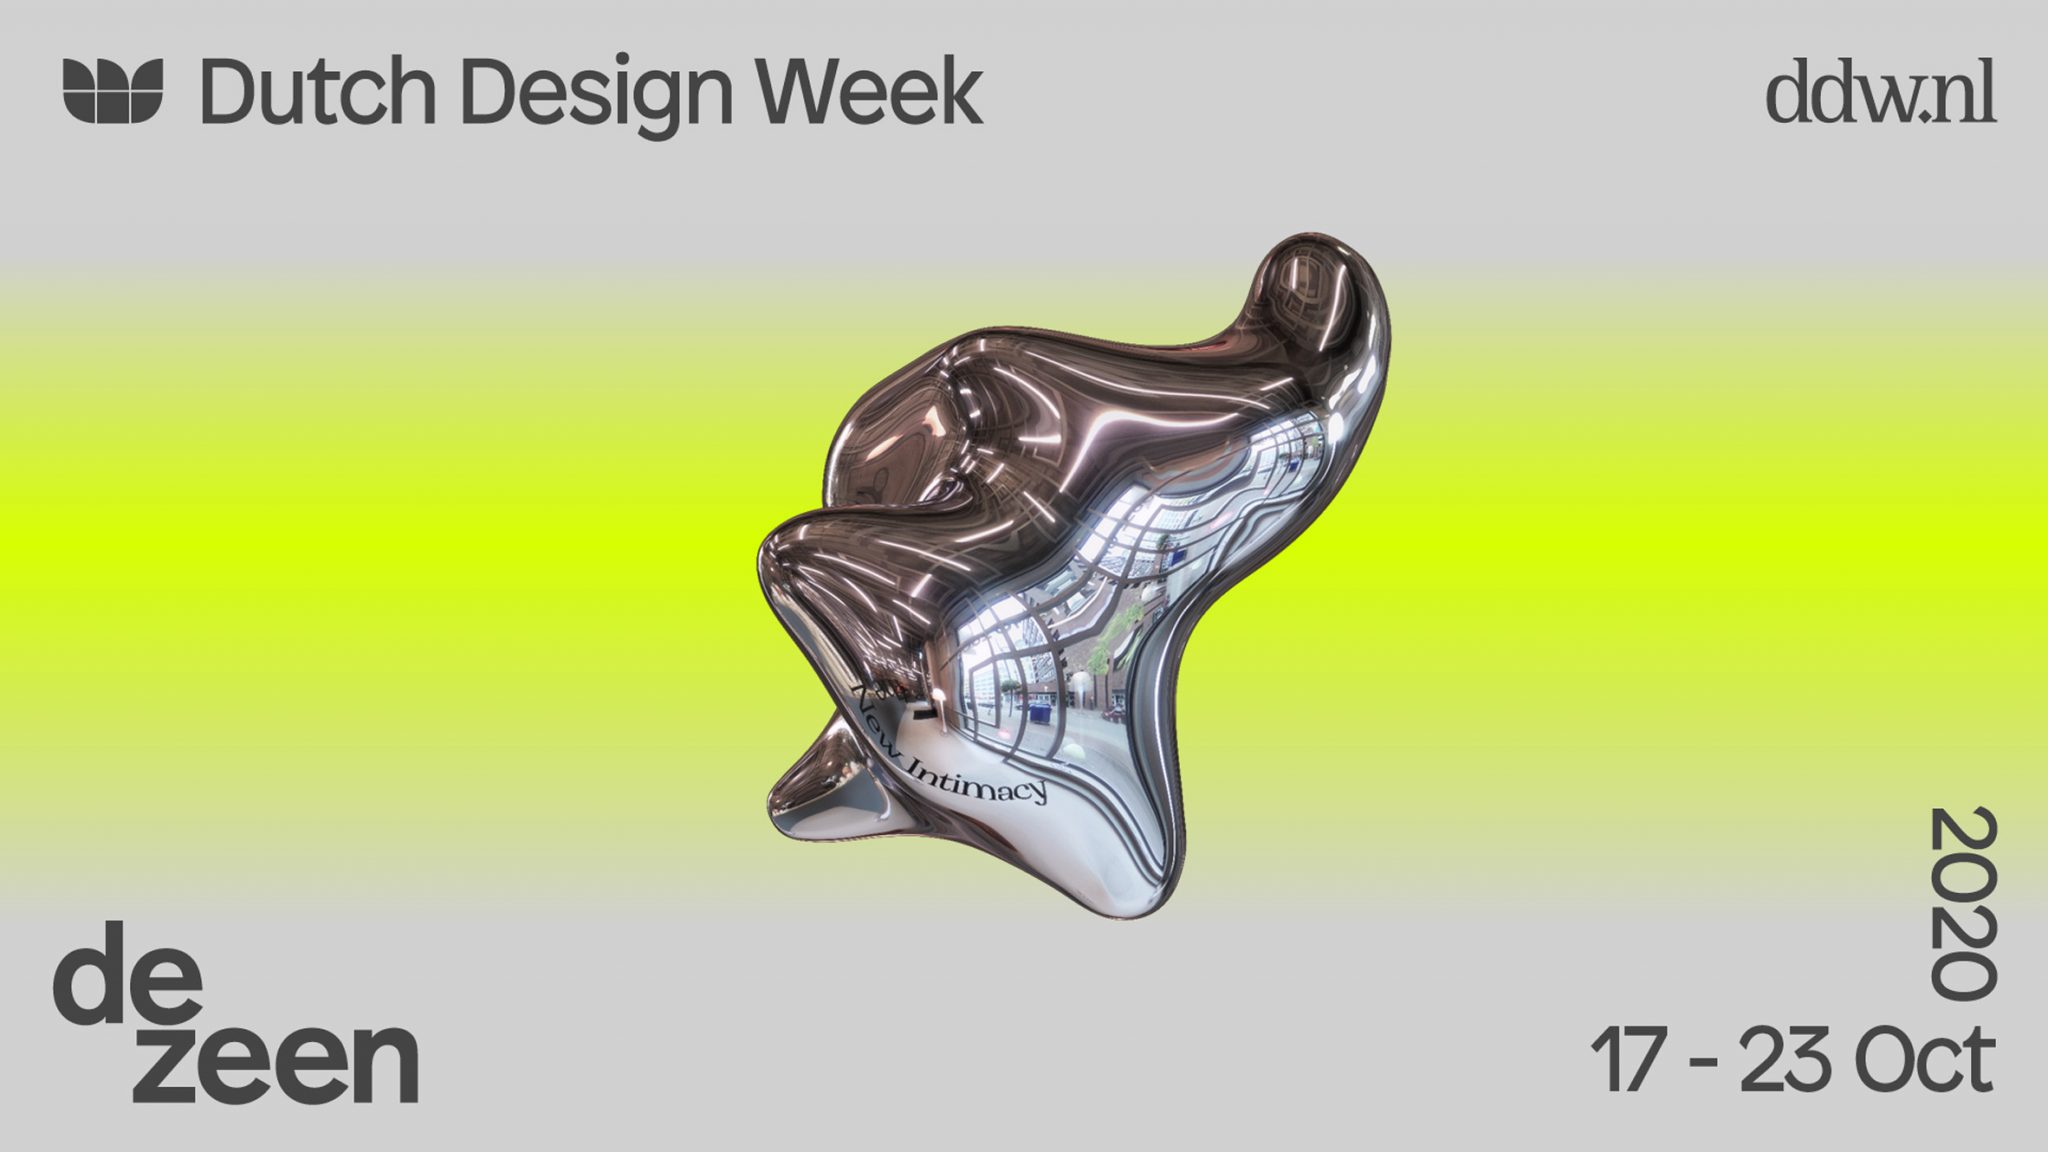 Dutch Design Week talks